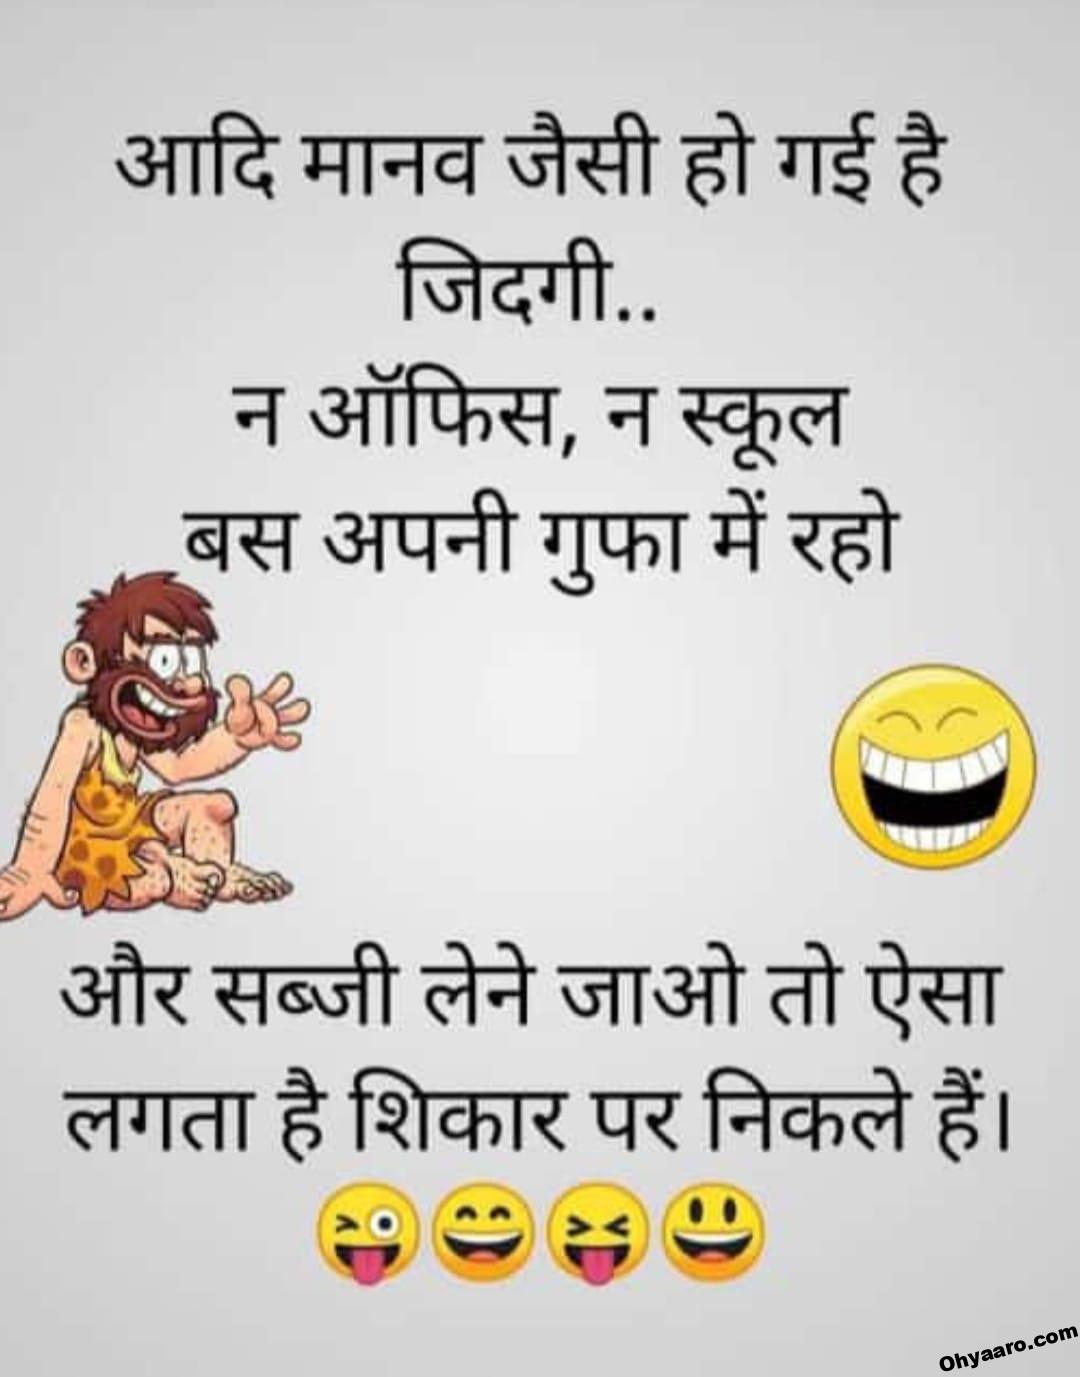 Funny Hindi Jokes For WhatsApp - Funny Jokes in Hindi 2021 - Oh Yaaro